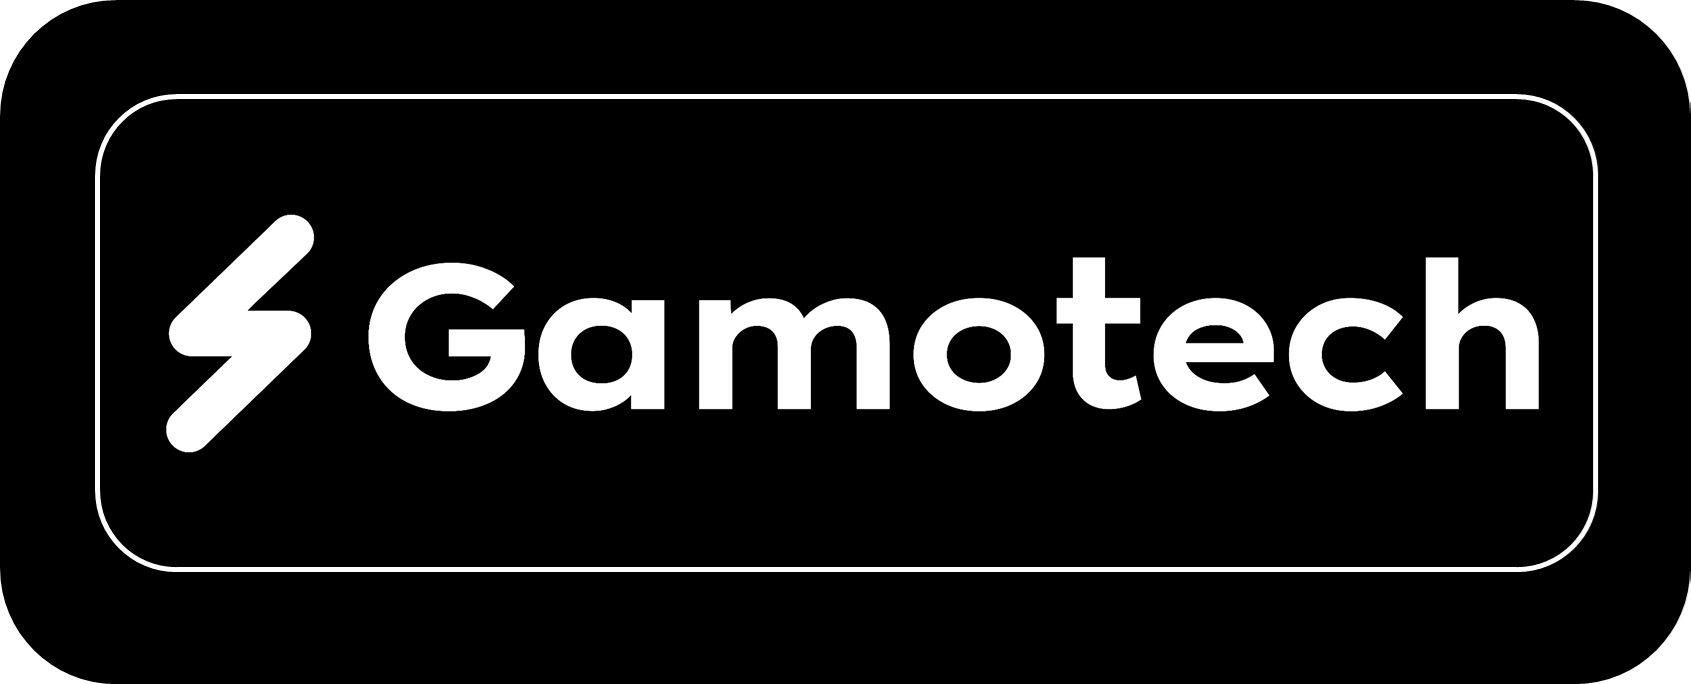 Gamox 可以独立安装并安装在皮卡的背面